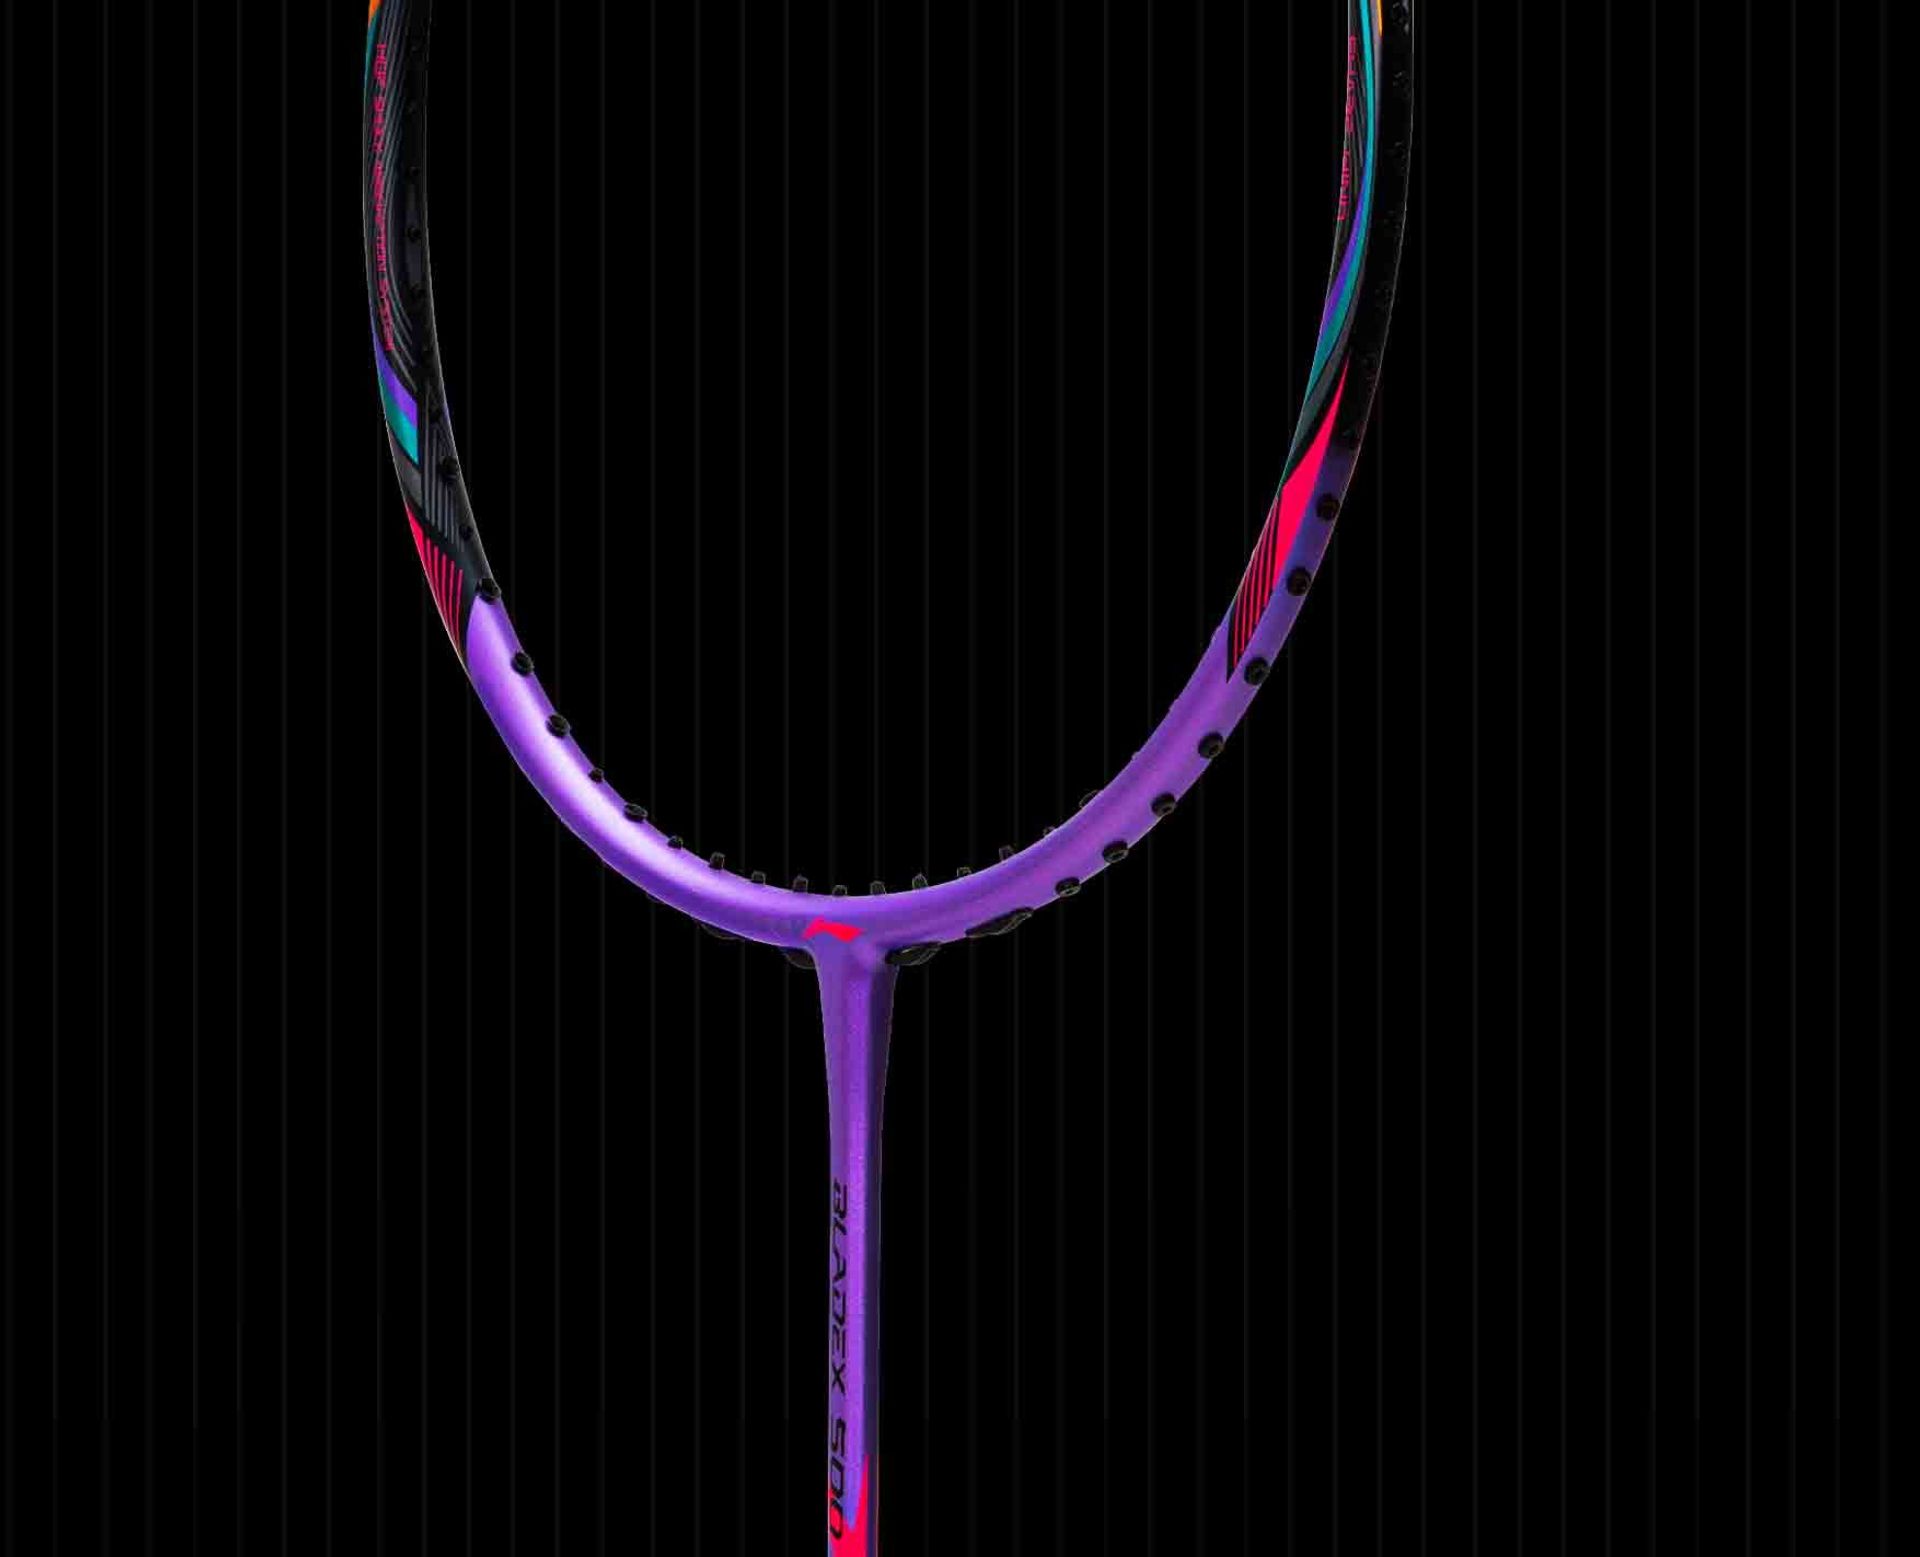 Close up of Blade X 500 Badminton racket head by Li-Ning Studio